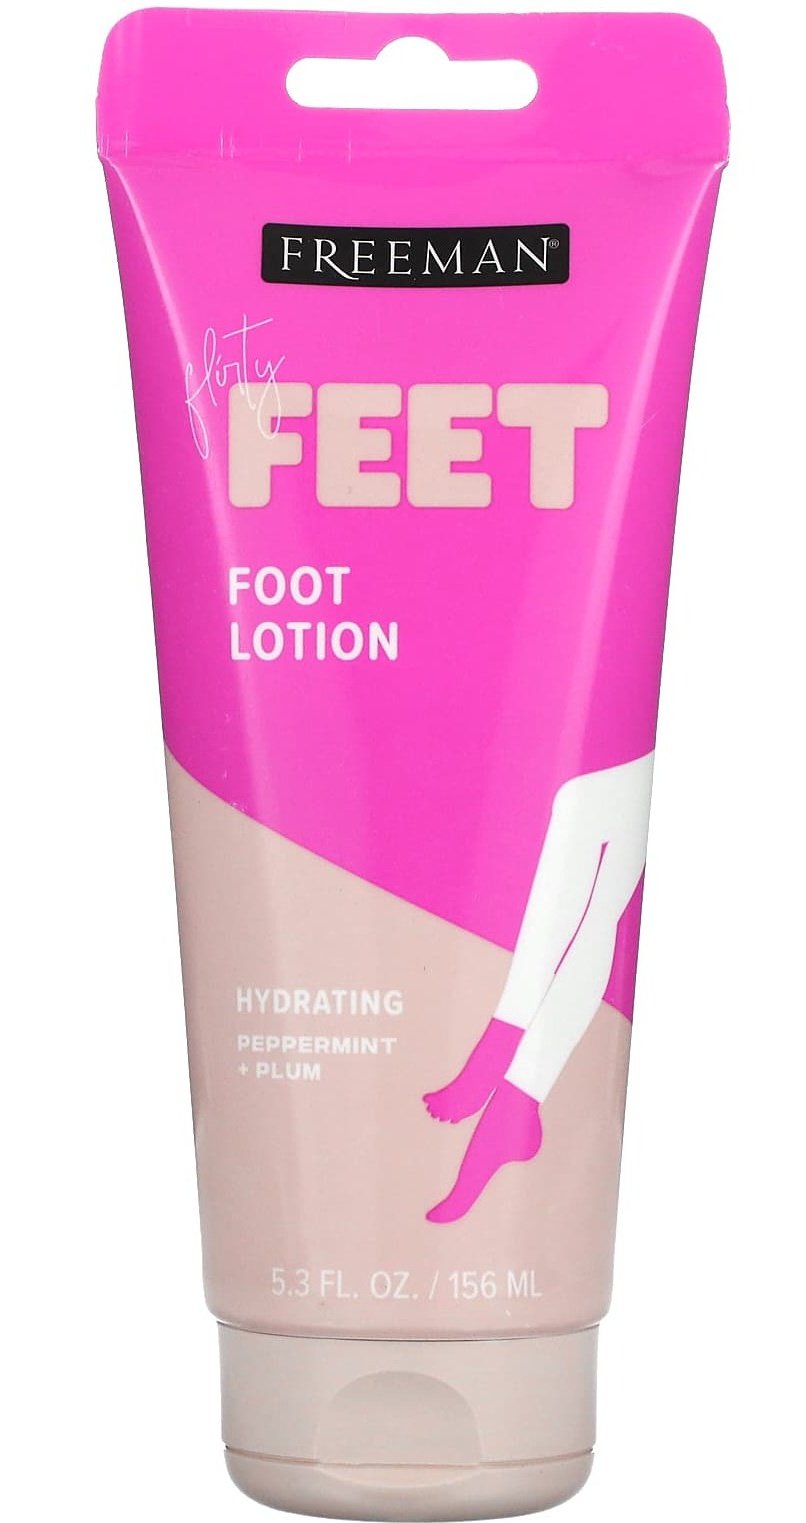 Freeman Flirty Feet Hydrating Peppermint & Plum Foot Lotion